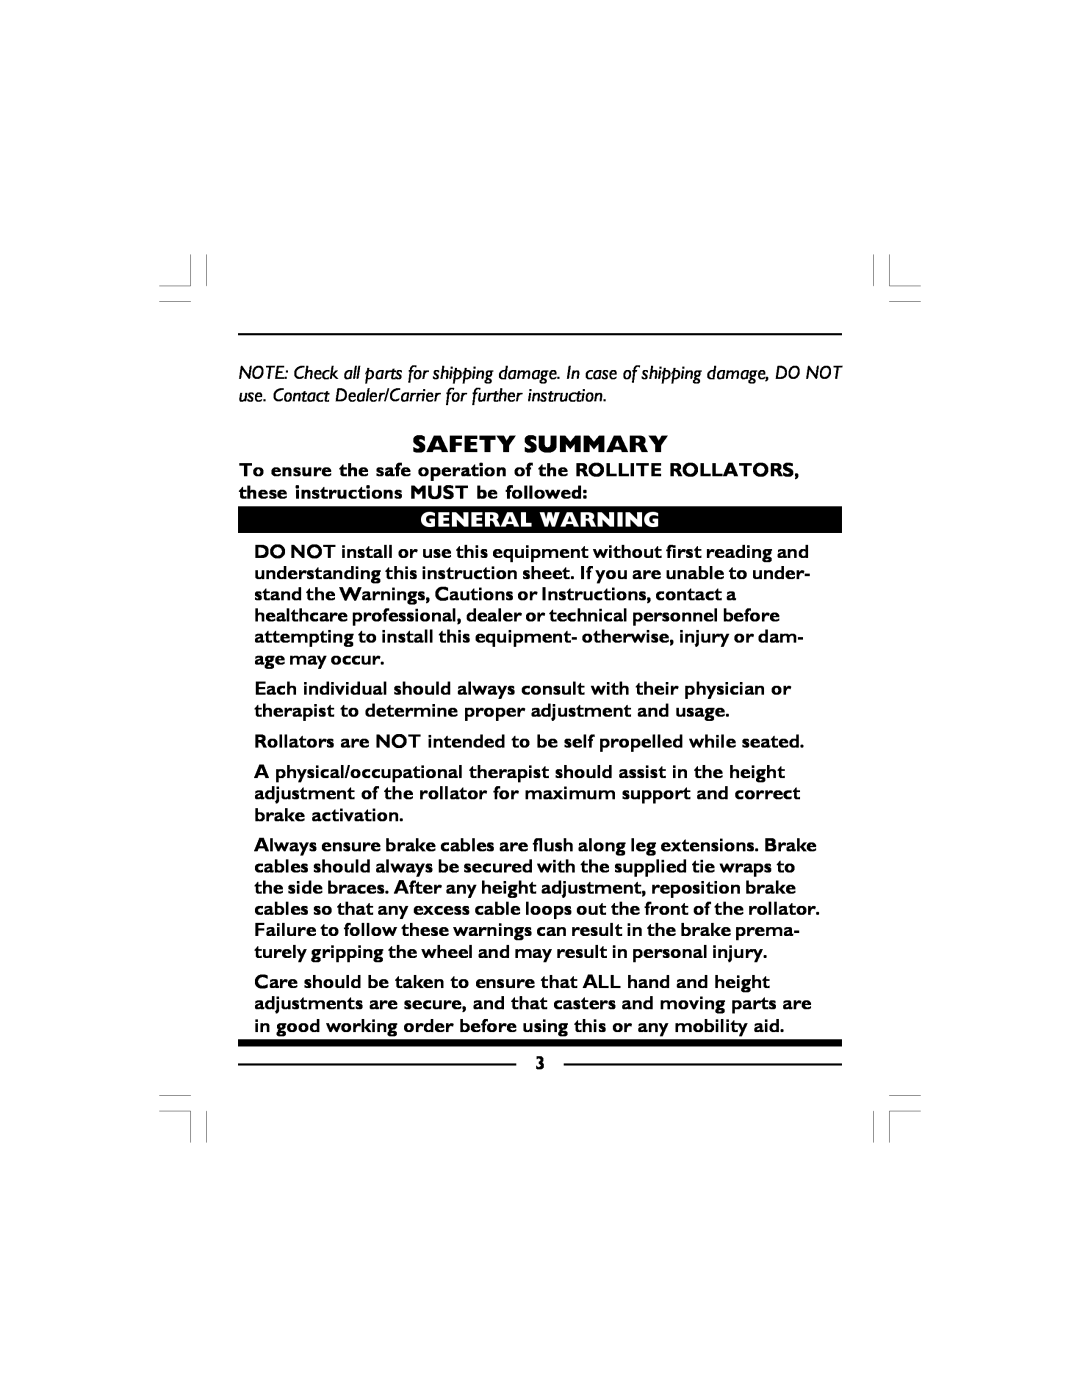 Invacare 65100-JR, 68100-TA, 65100R-JR manual Safety Summary, General Warning 